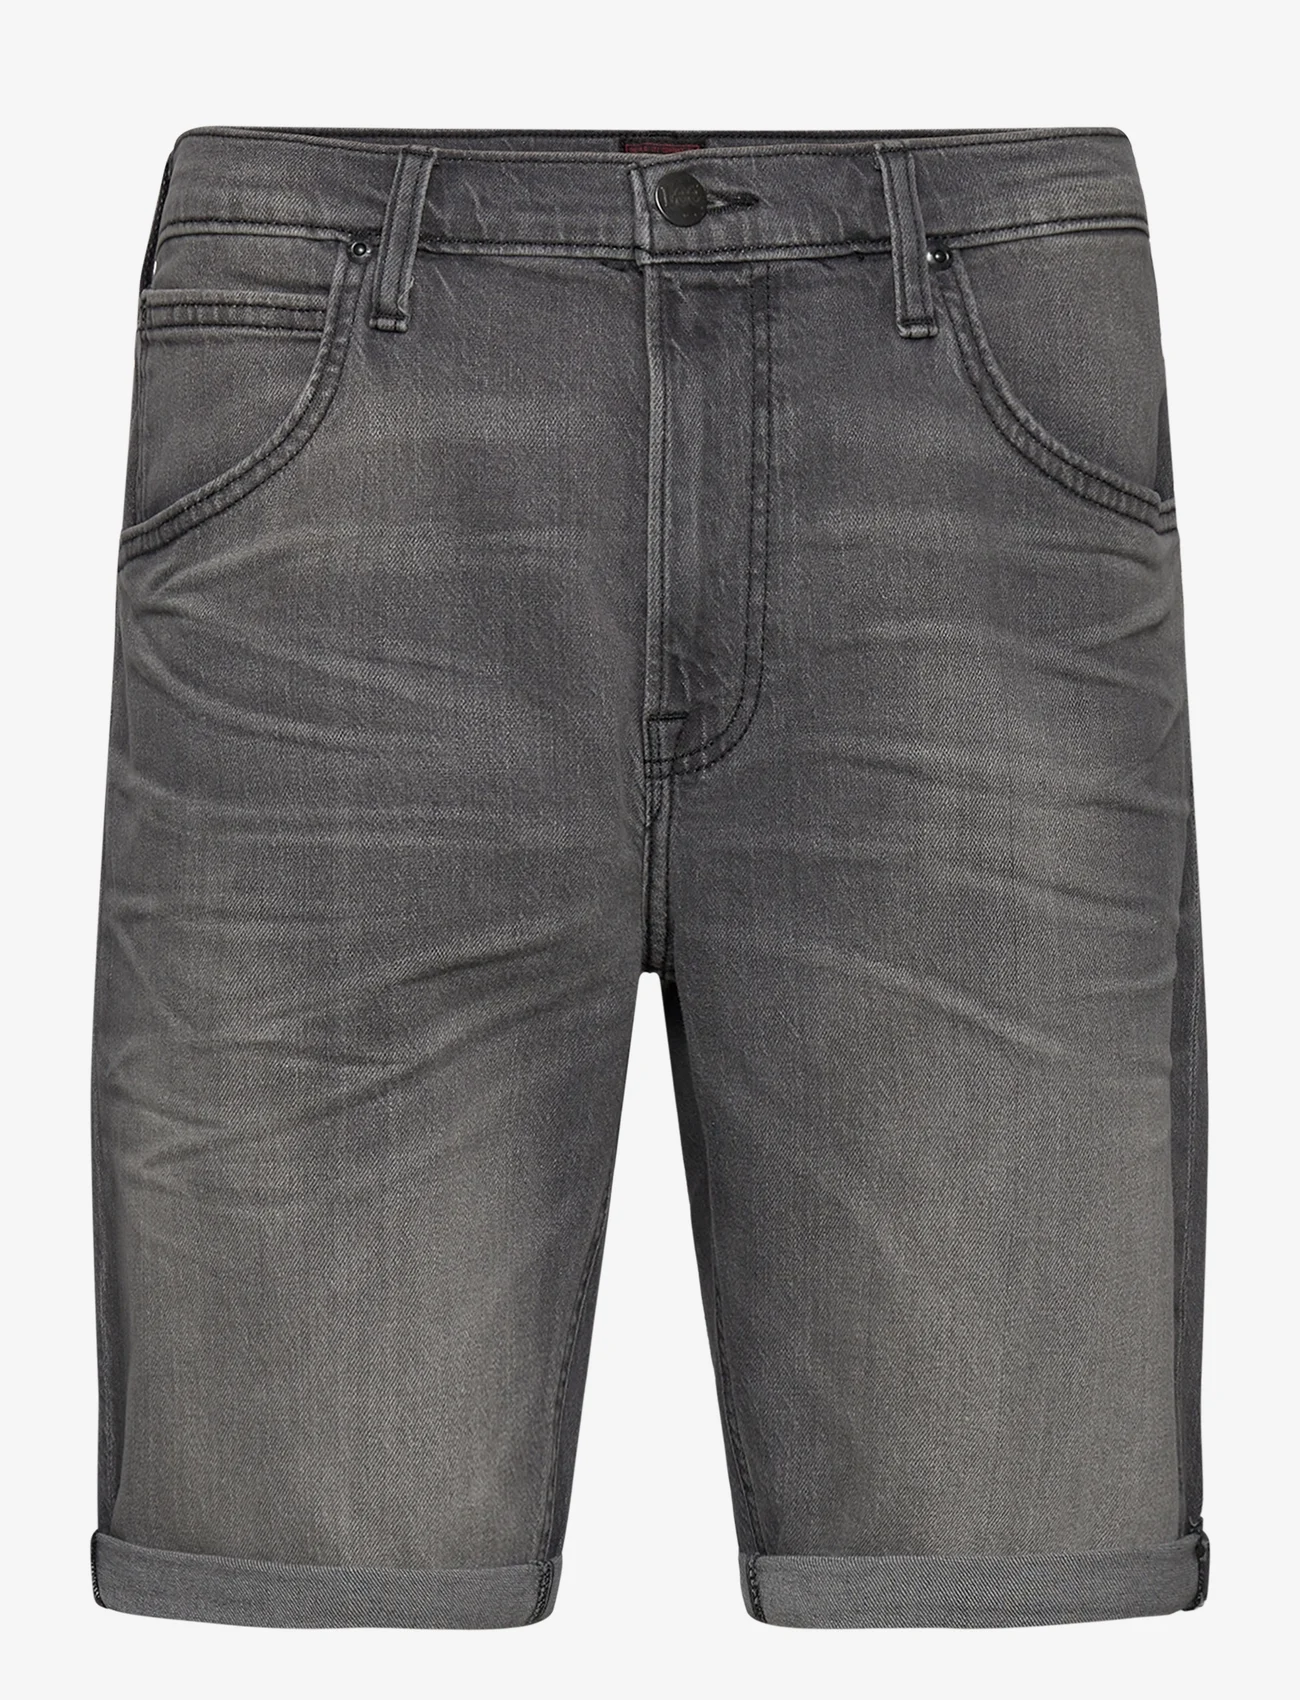 Lee Jeans - 5 POCKET SHORT - džinsa šorti - washed grey - 0